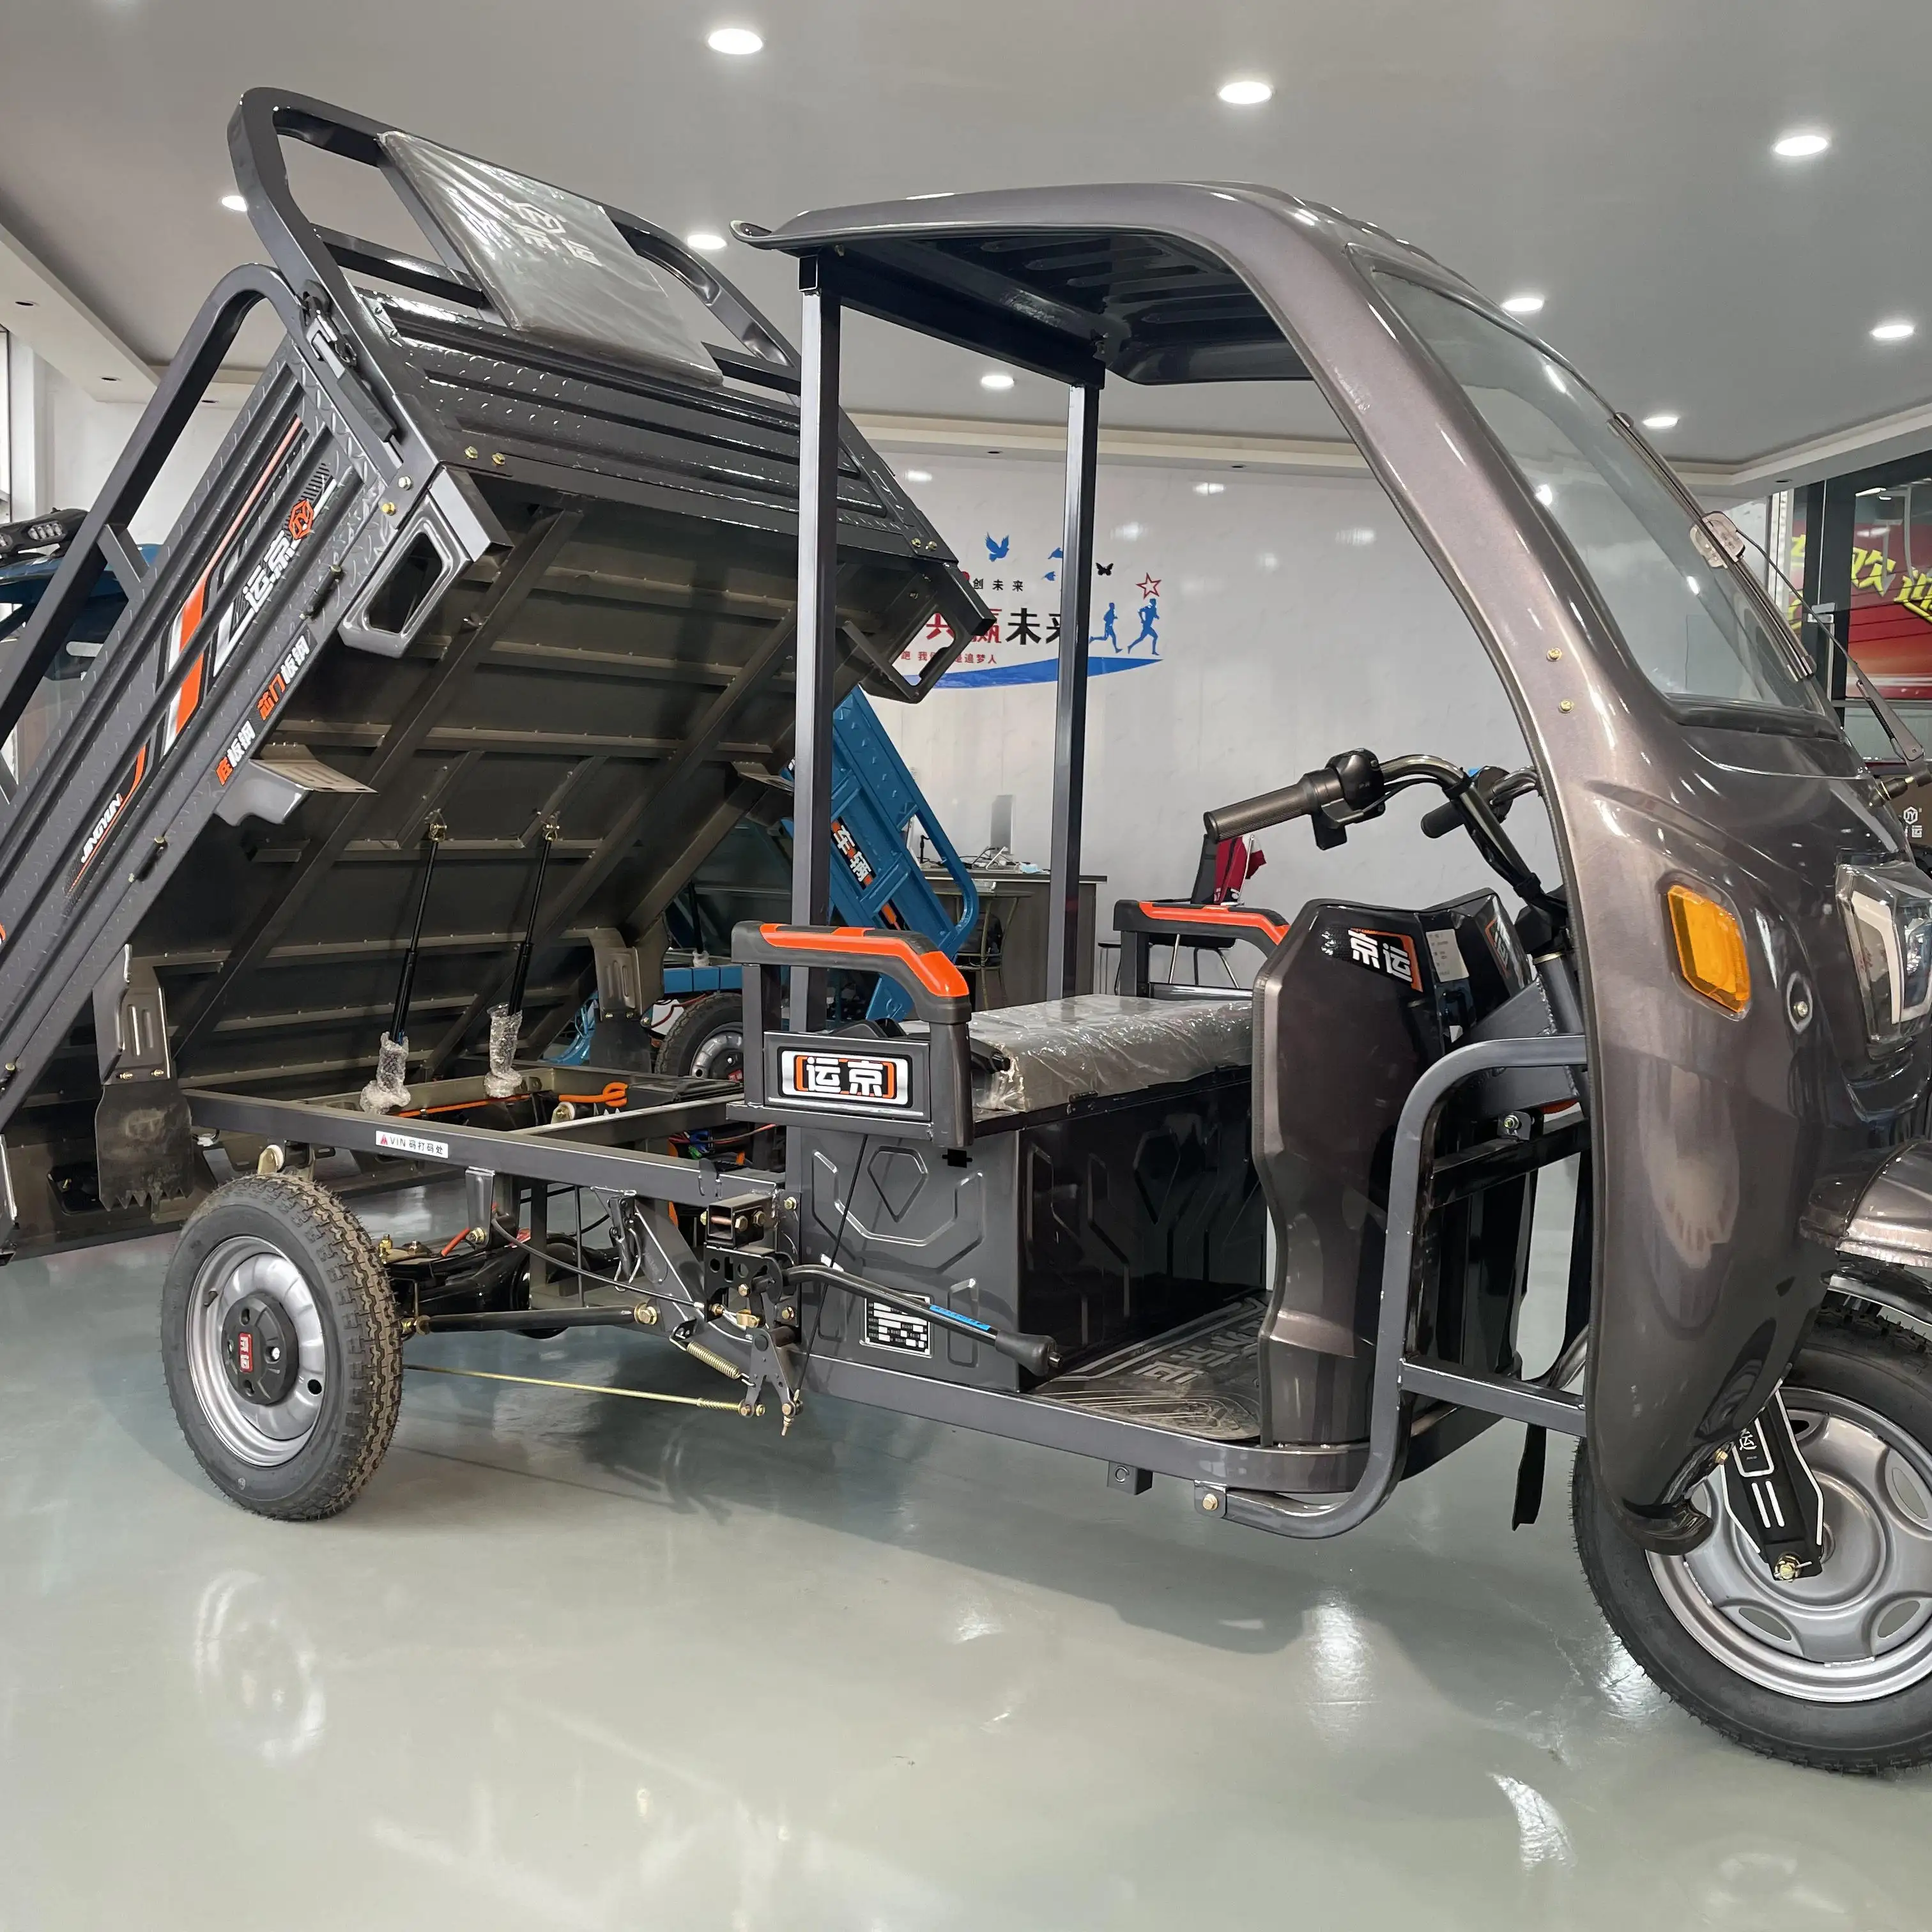 1300W China Elektrische Lading Driewielers 3 Wiel Dump Trike Fiets Big Dreirad Elektro Voor Volwassenen Elektrische Driewieler